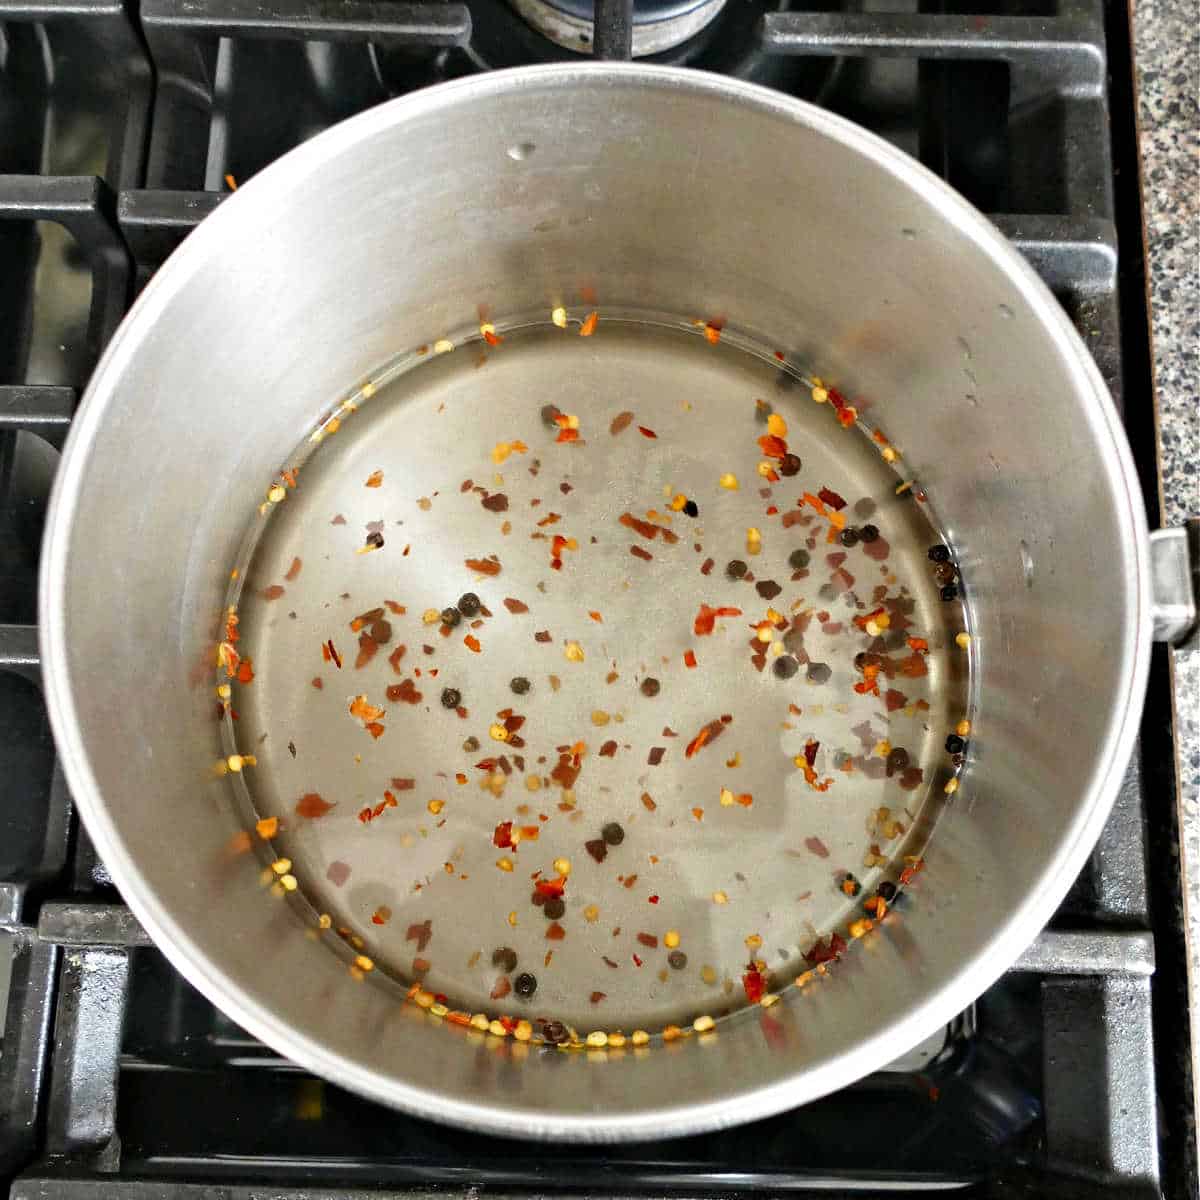 brine made from vinegar, water, salt, sugar, and spices in a saucepan